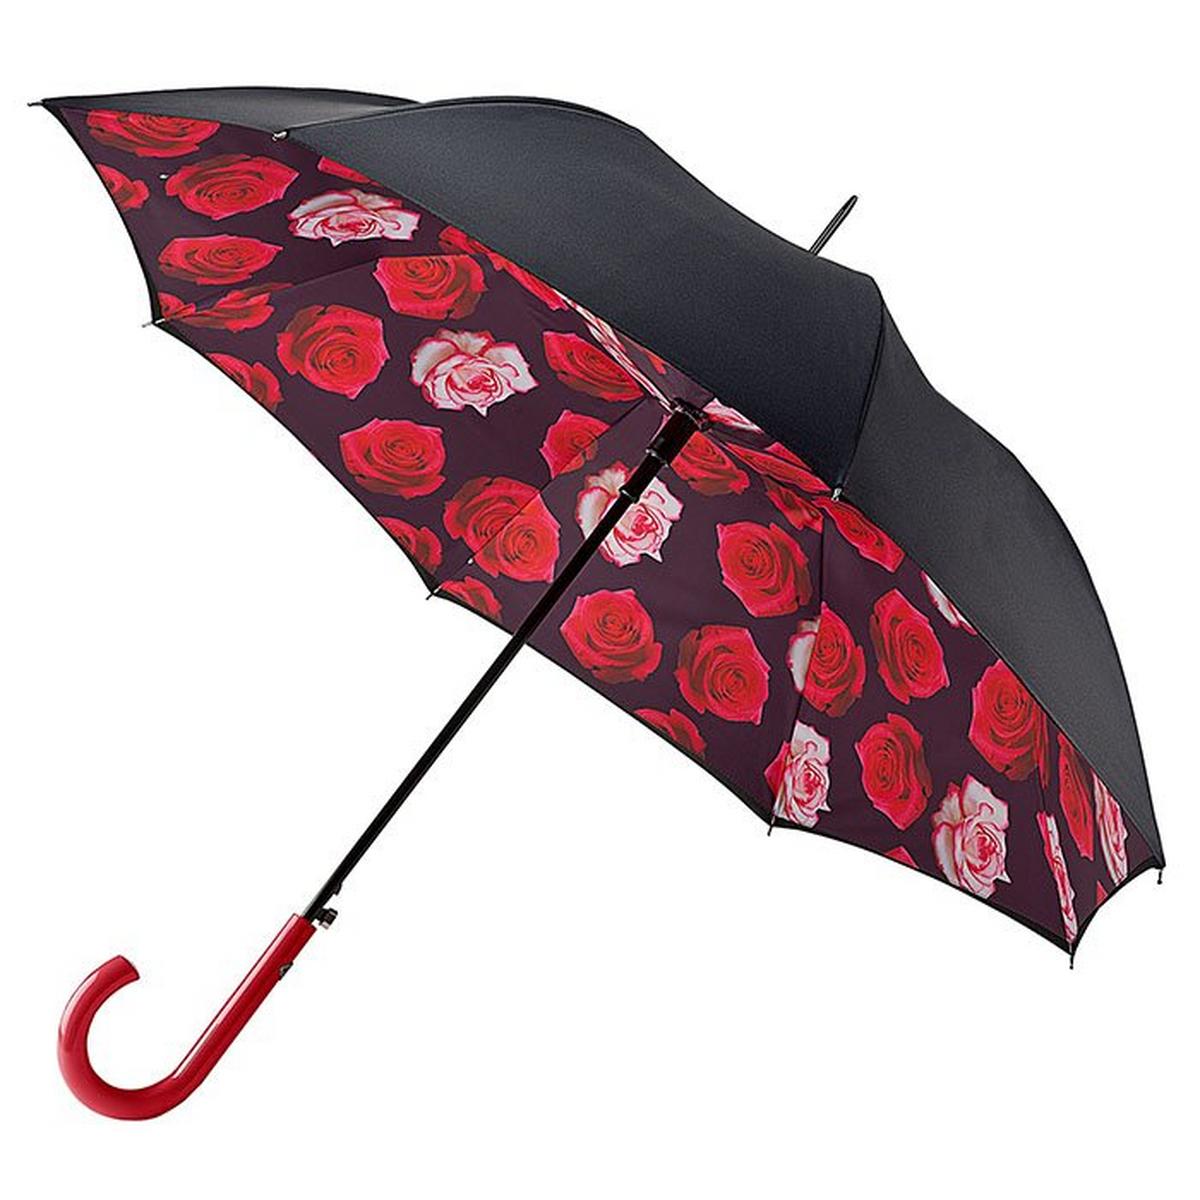 Bloomsbury 2 Umbrella